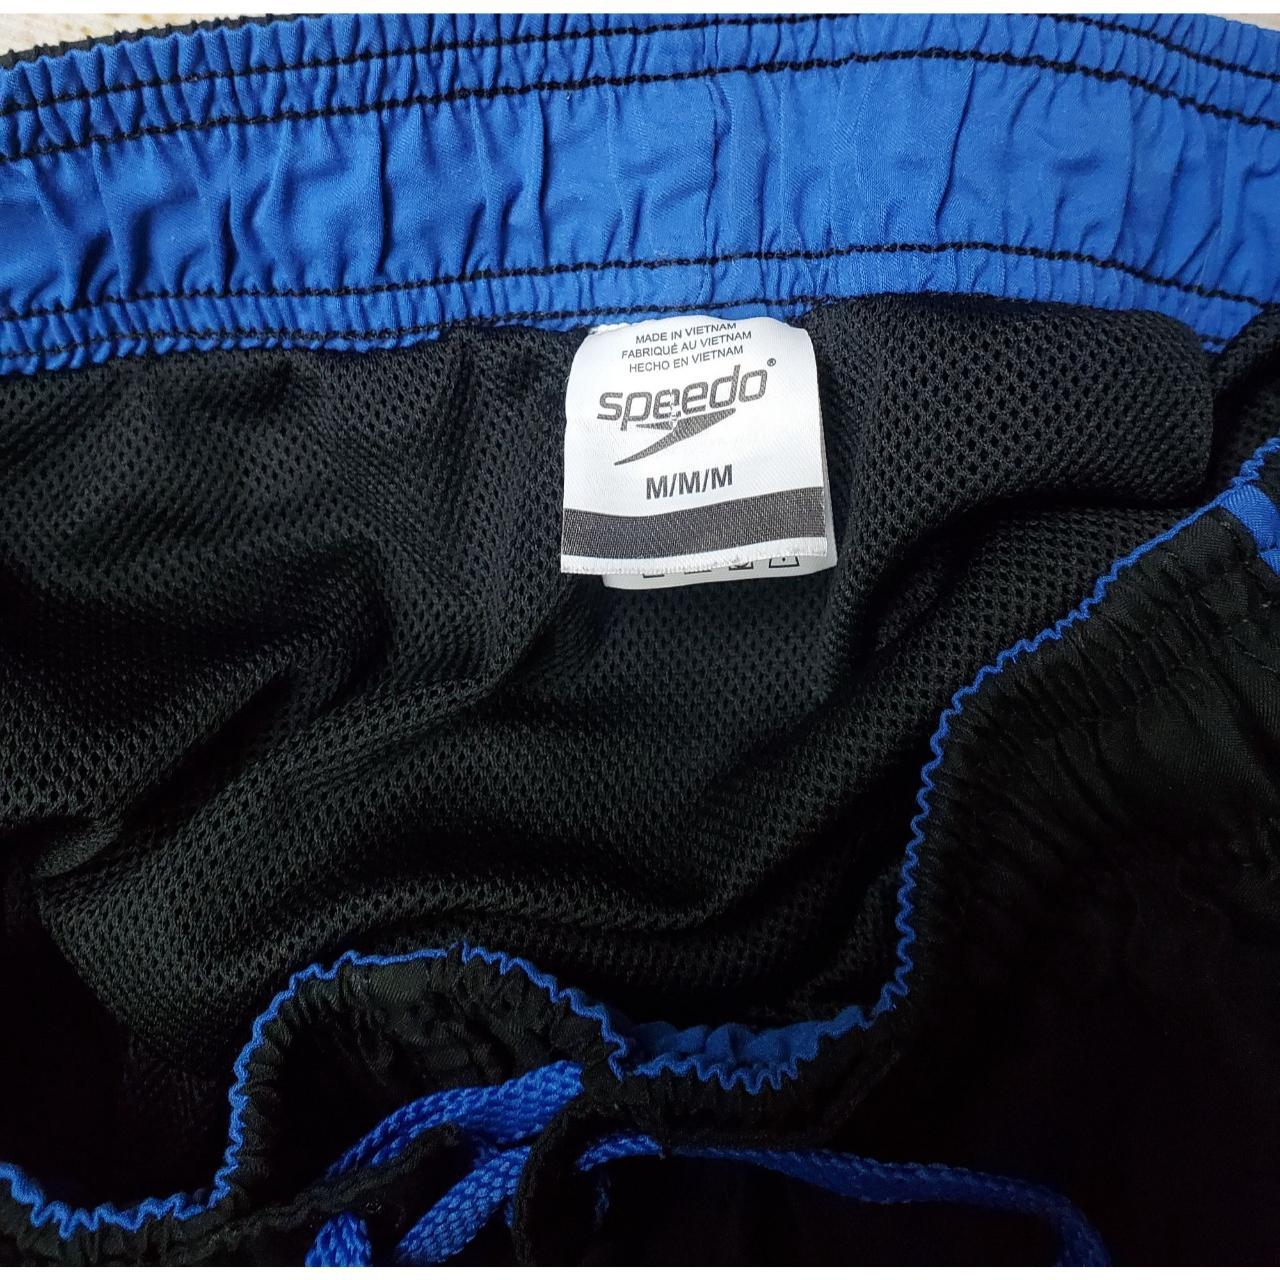 Product Image 4 - Med Speedo Board/Swim Shorts
Waist: 13
Length: